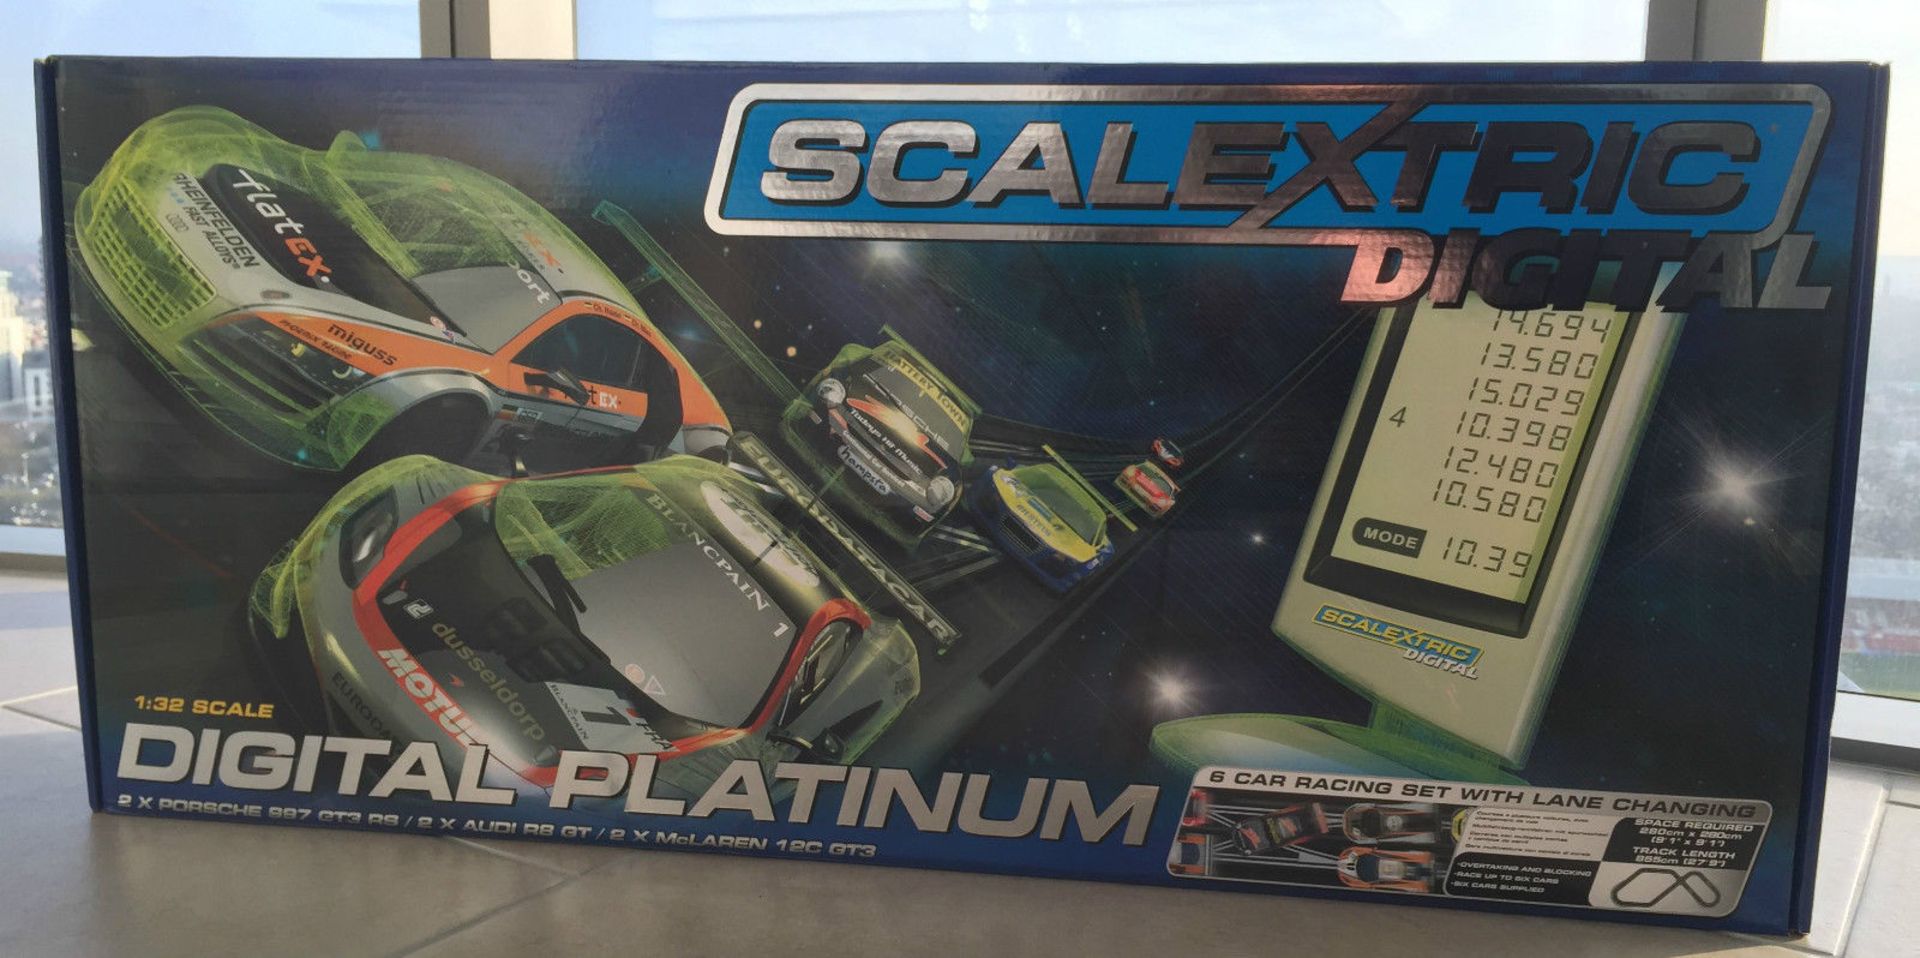 Scalextric Digital Platinum
1:32 Scale
6 cars included
New unused unopened - Image 8 of 9